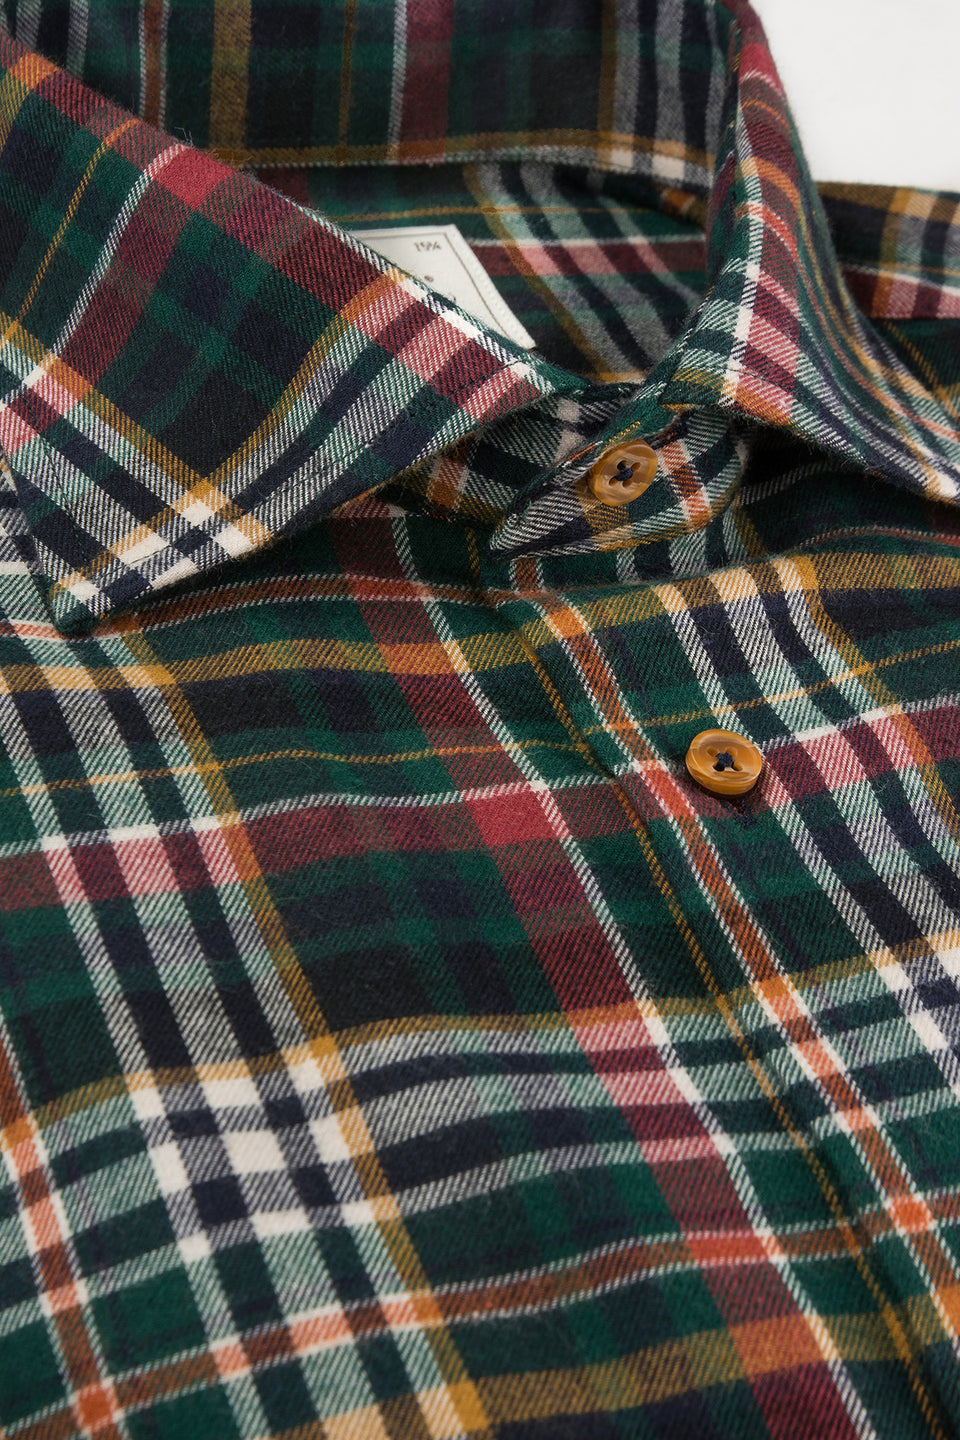 Oscar of Sweden - Swedish shirtmaker since 1949.